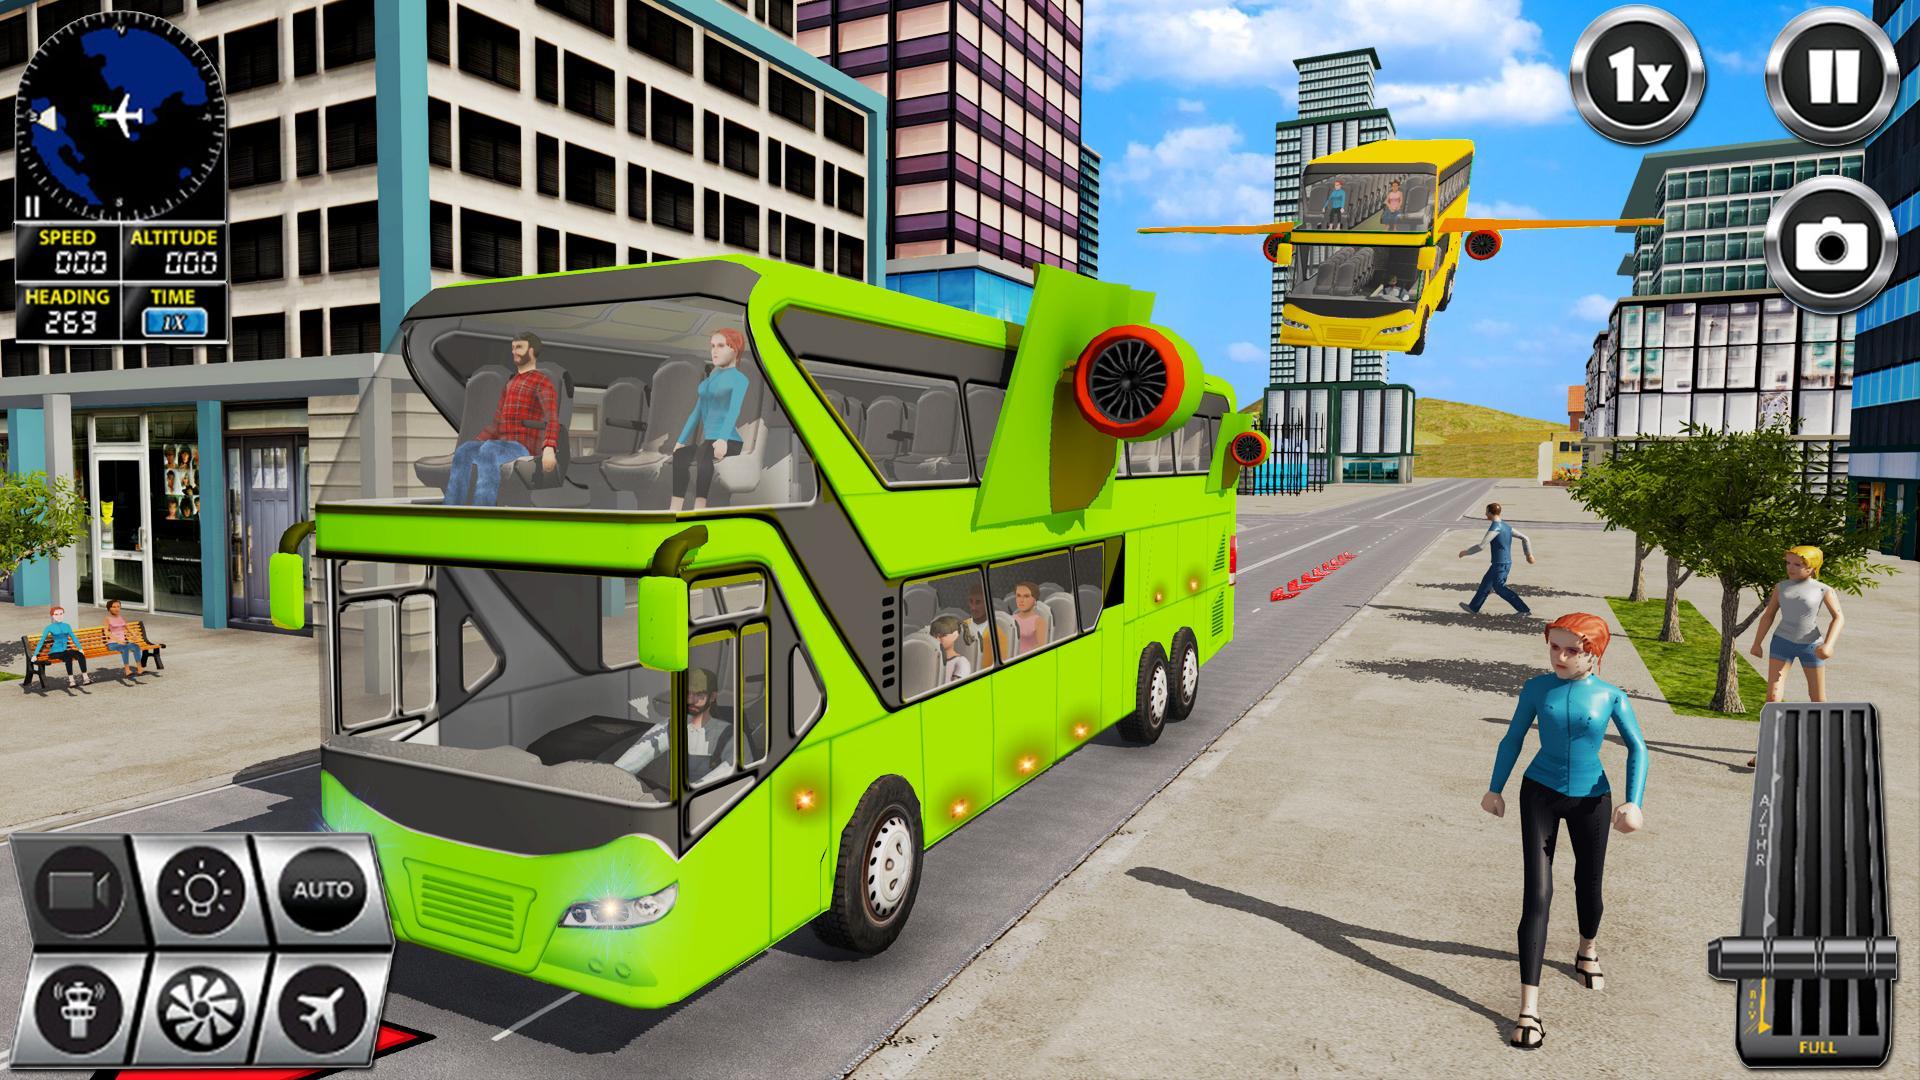 Flying Bus Driving simulator 2019: Free Bus Games 2.8 Screenshot 16